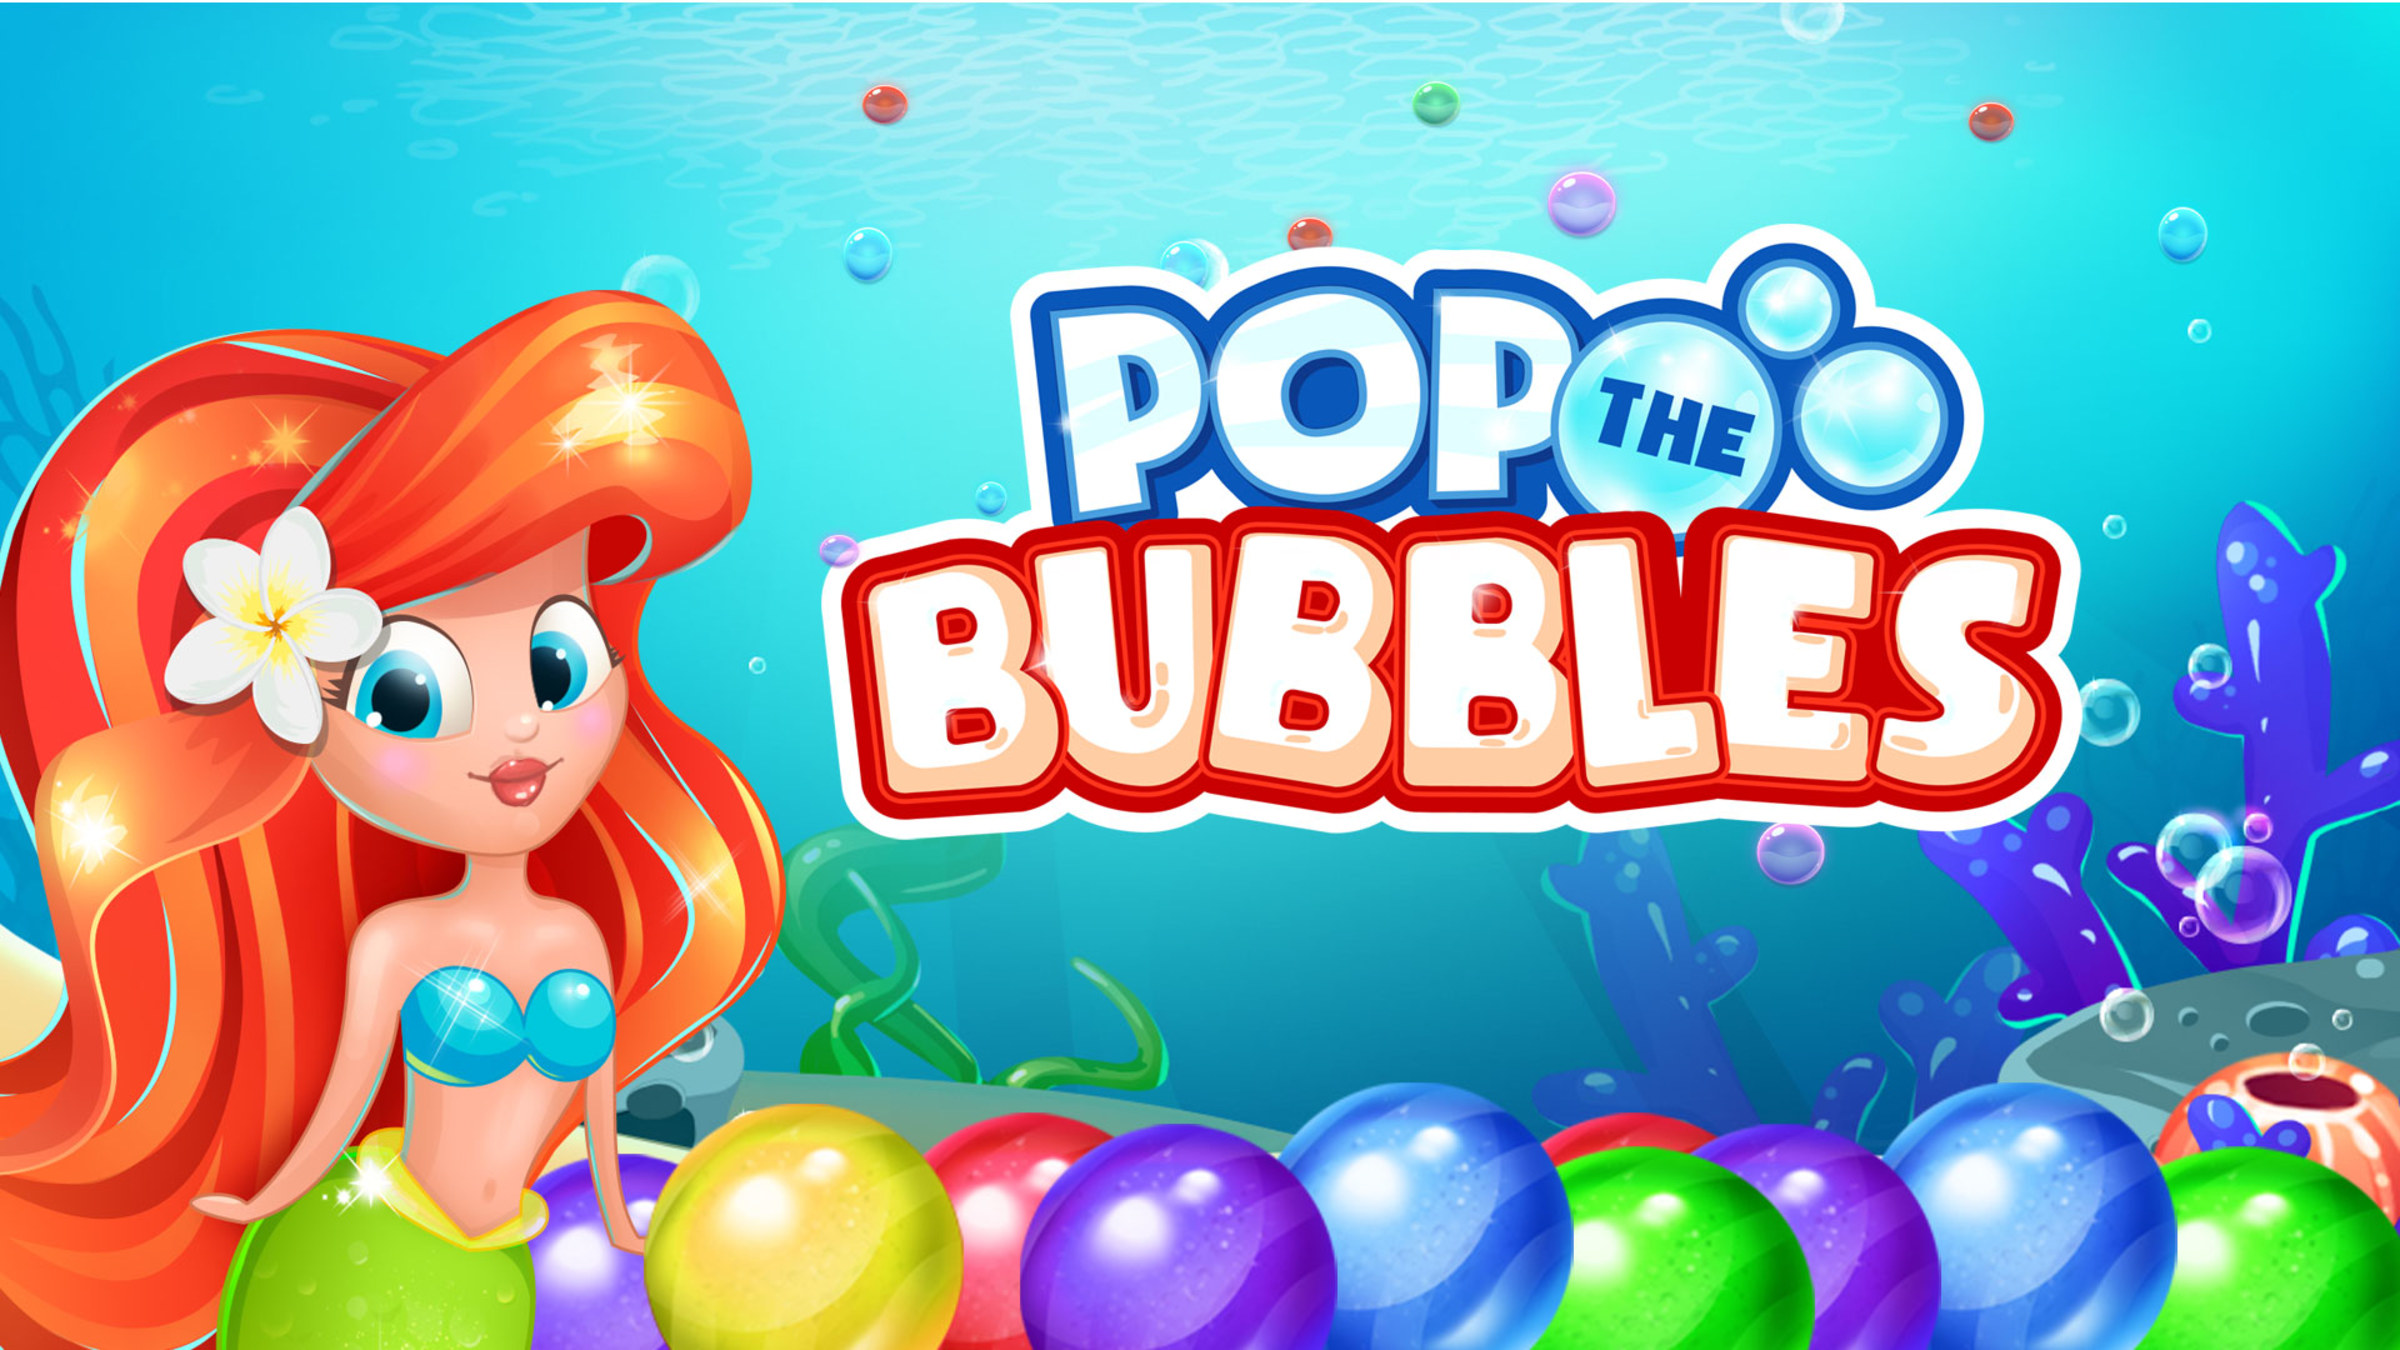 Bubble Shooter - Classic Shoot Bubble Pop Puzzle Game Fun